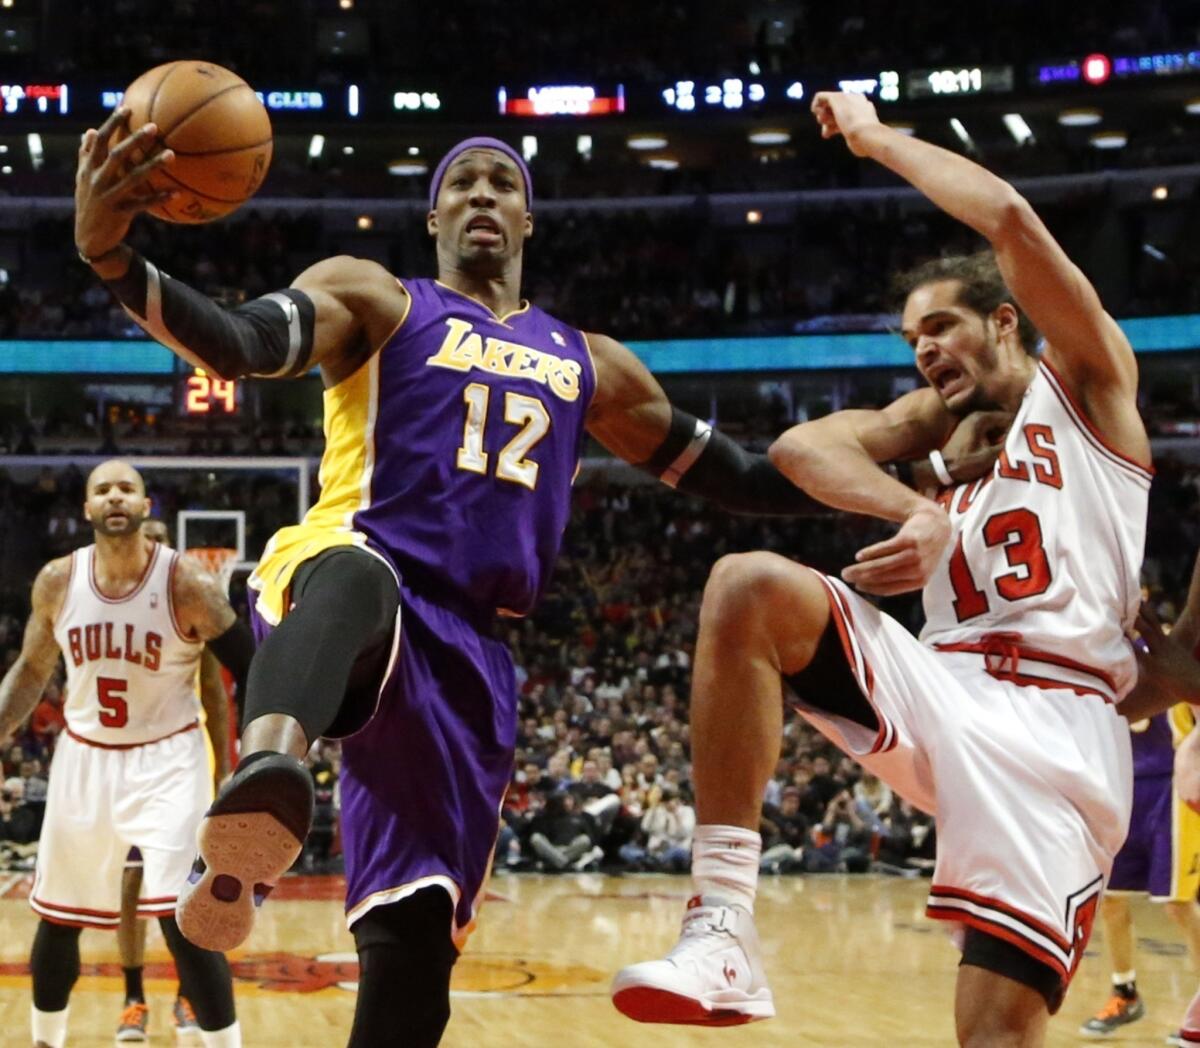 Lakers center Dwight Howard battles Bulls center Joakim Noah for a rebound during a game earlier this season.